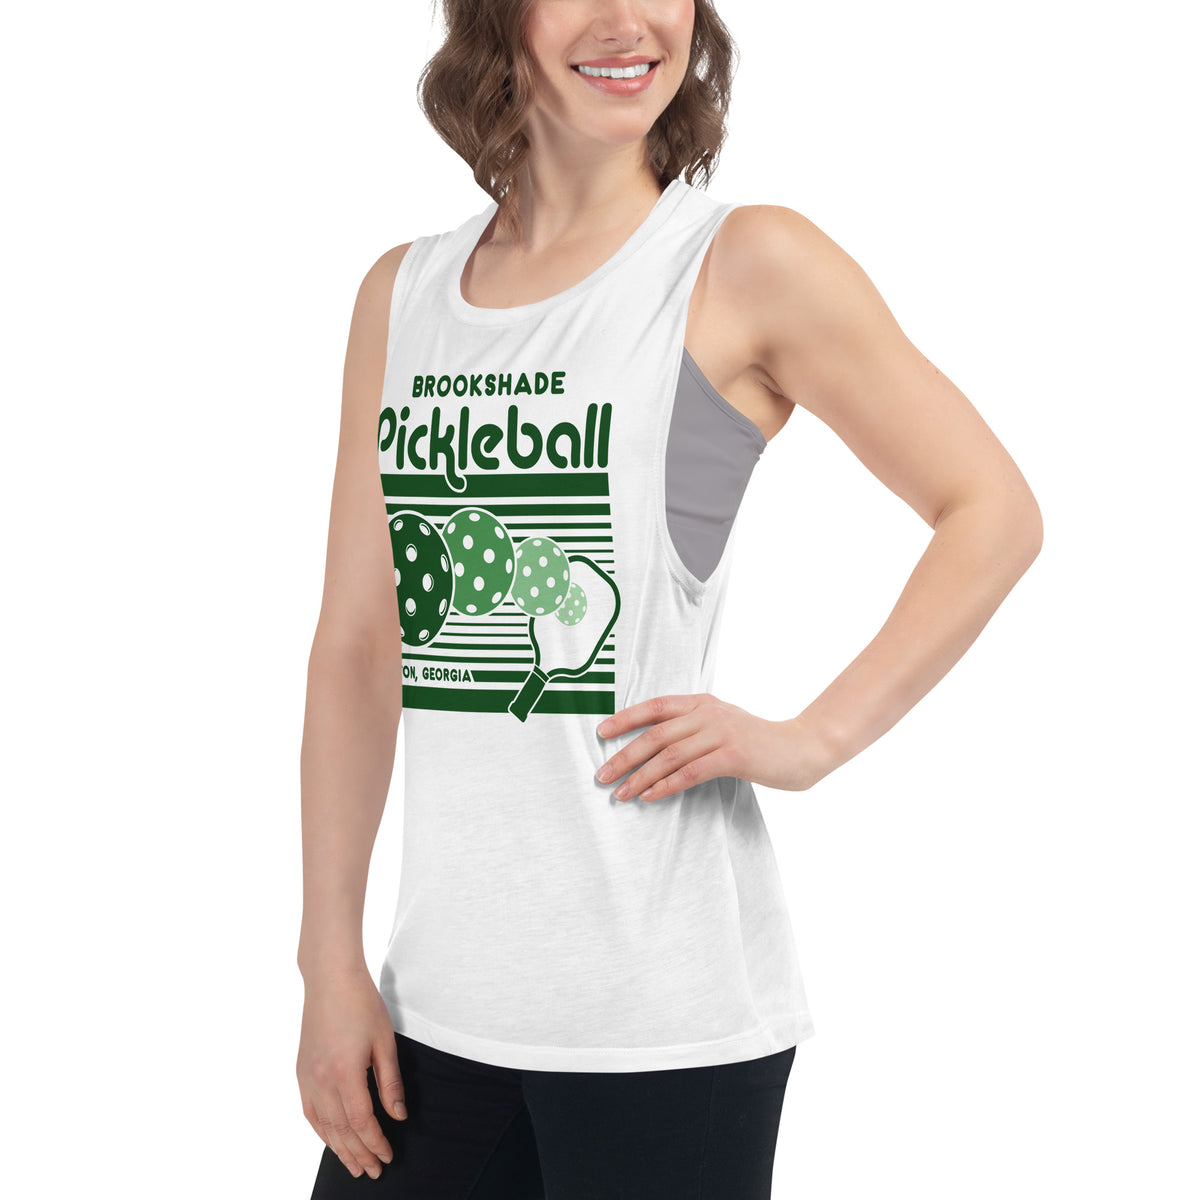 Brookshade Pickleball Women's Muscle Shirt